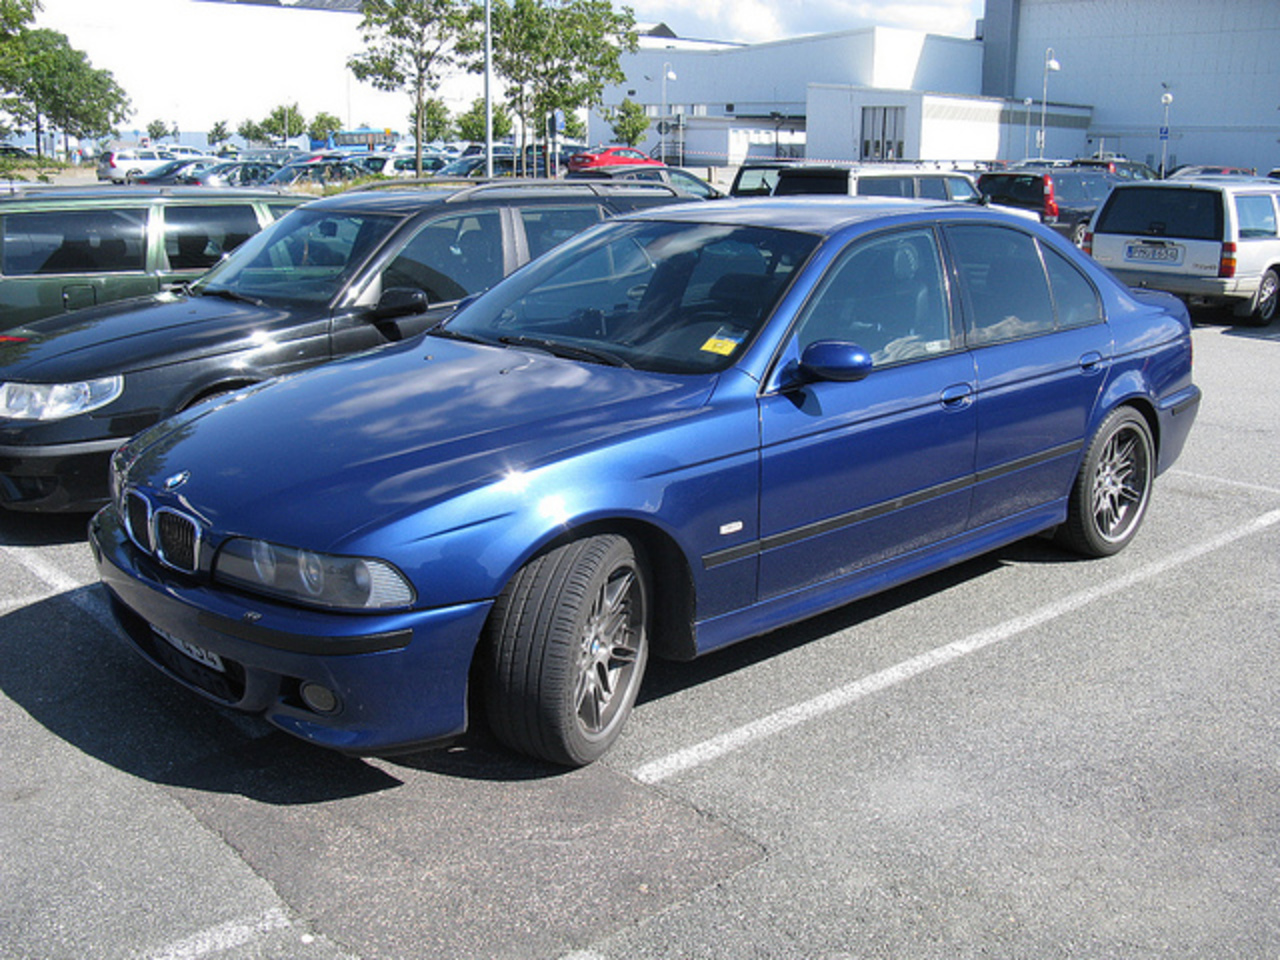 BMW M5 E39 | Flickr - Photo Sharing!